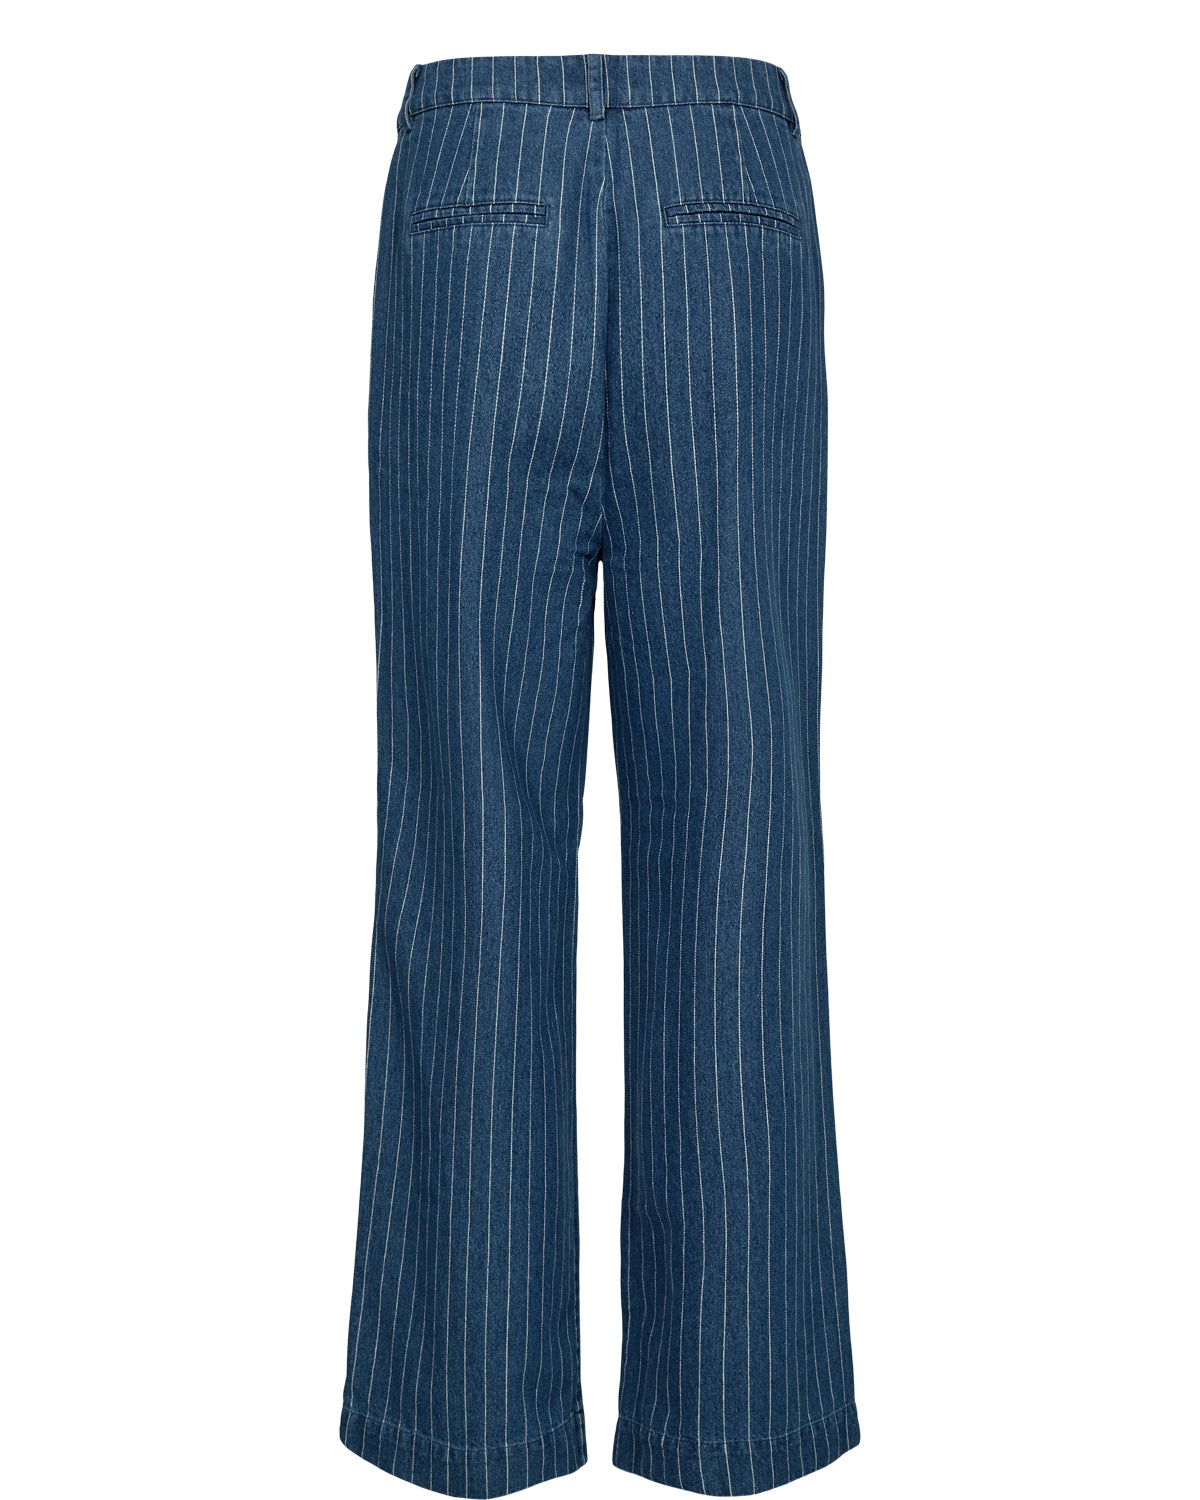 Nuenitta Pants - Medium Blue Denim